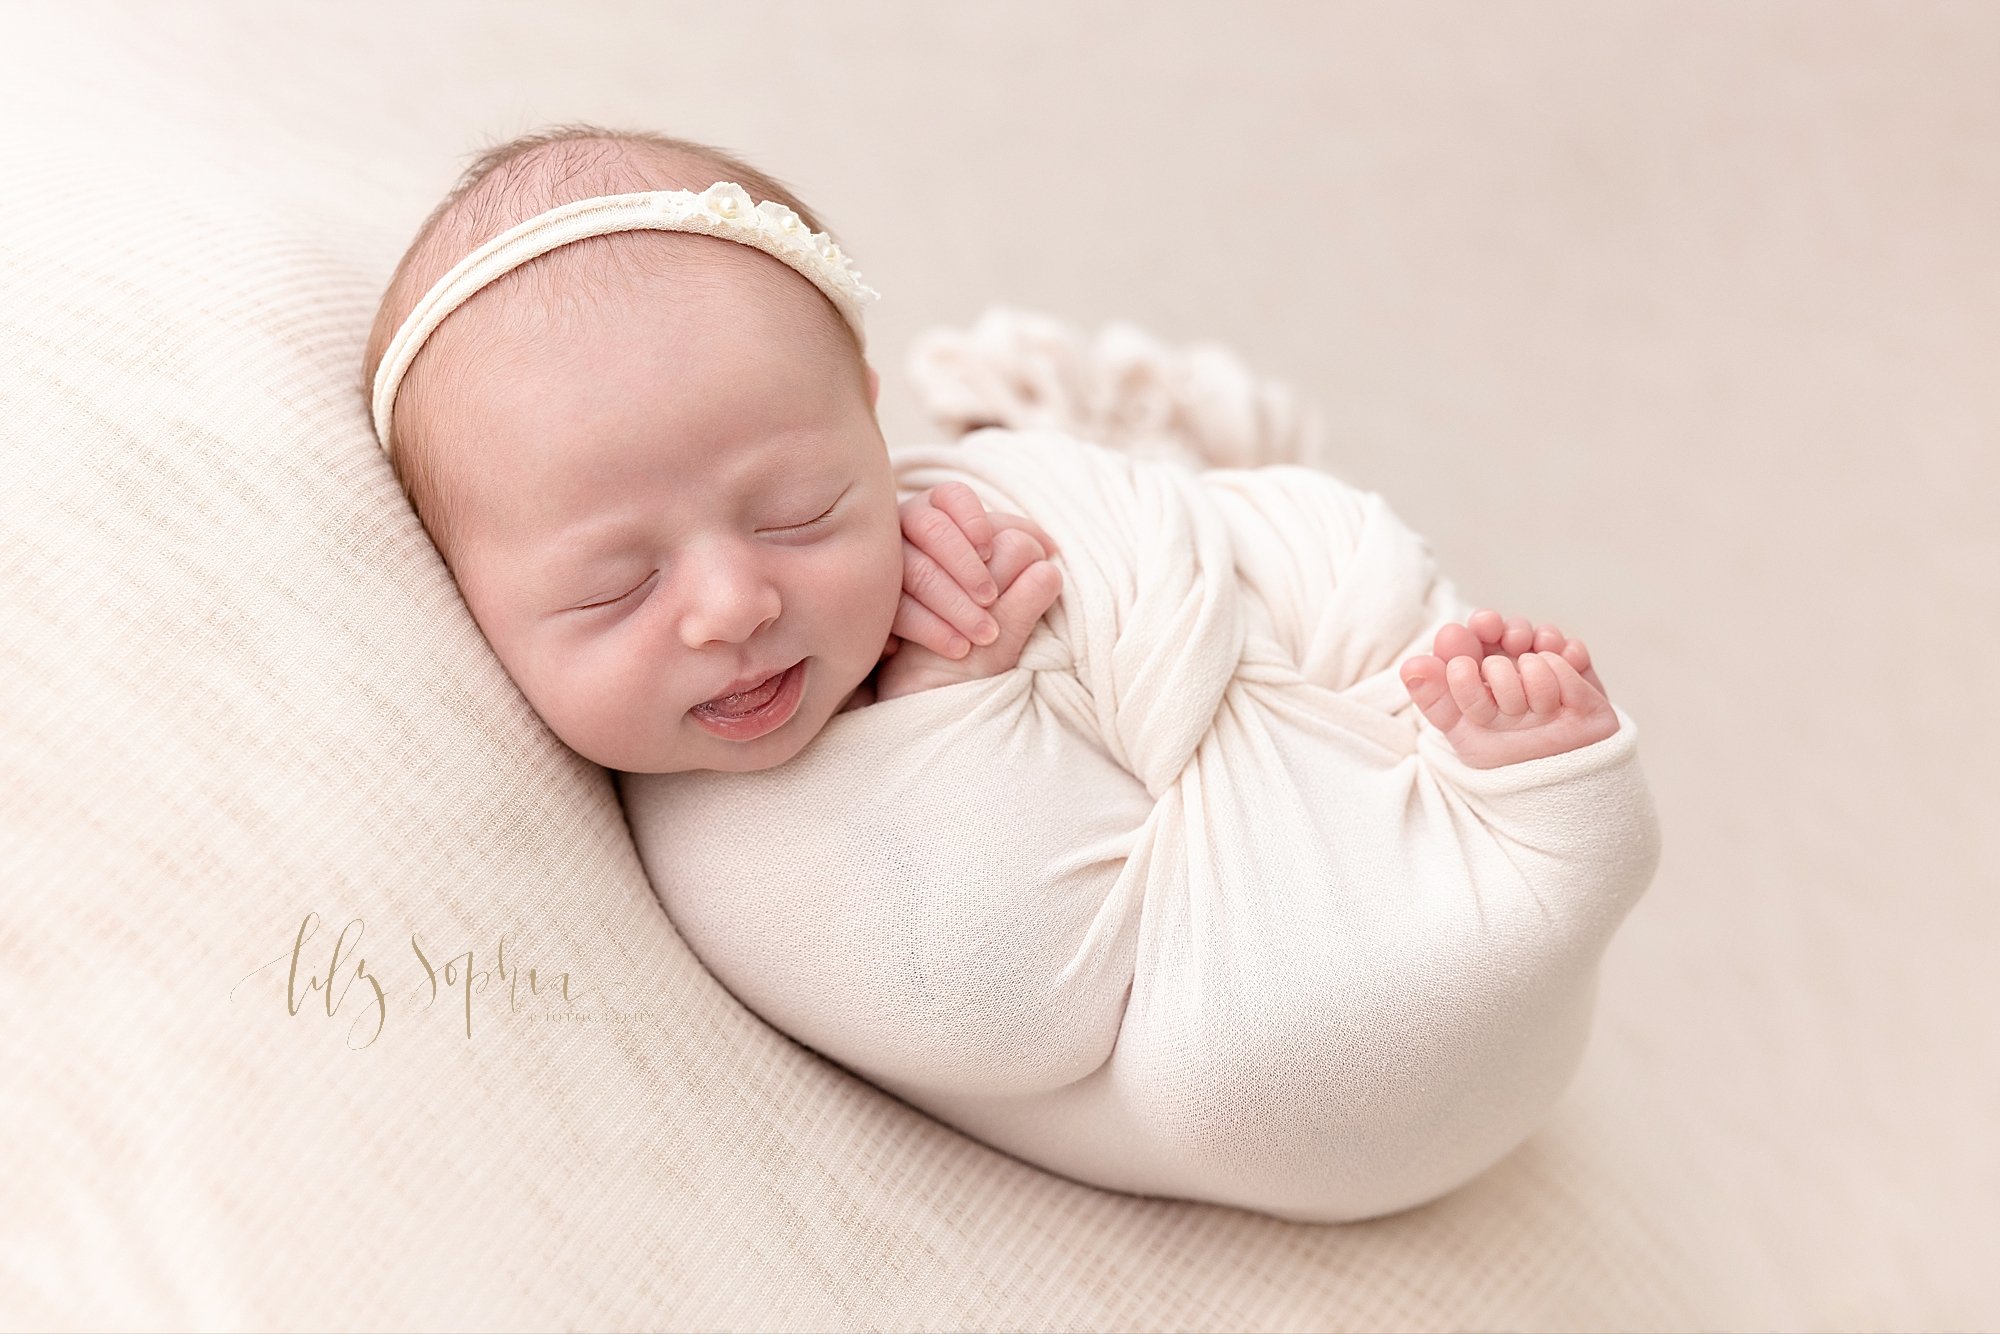 intown-atlanta-decatur-kirkwood-buckhead-studio-family-newborn-infant-baby-girl-photoshoot_4810.jpg